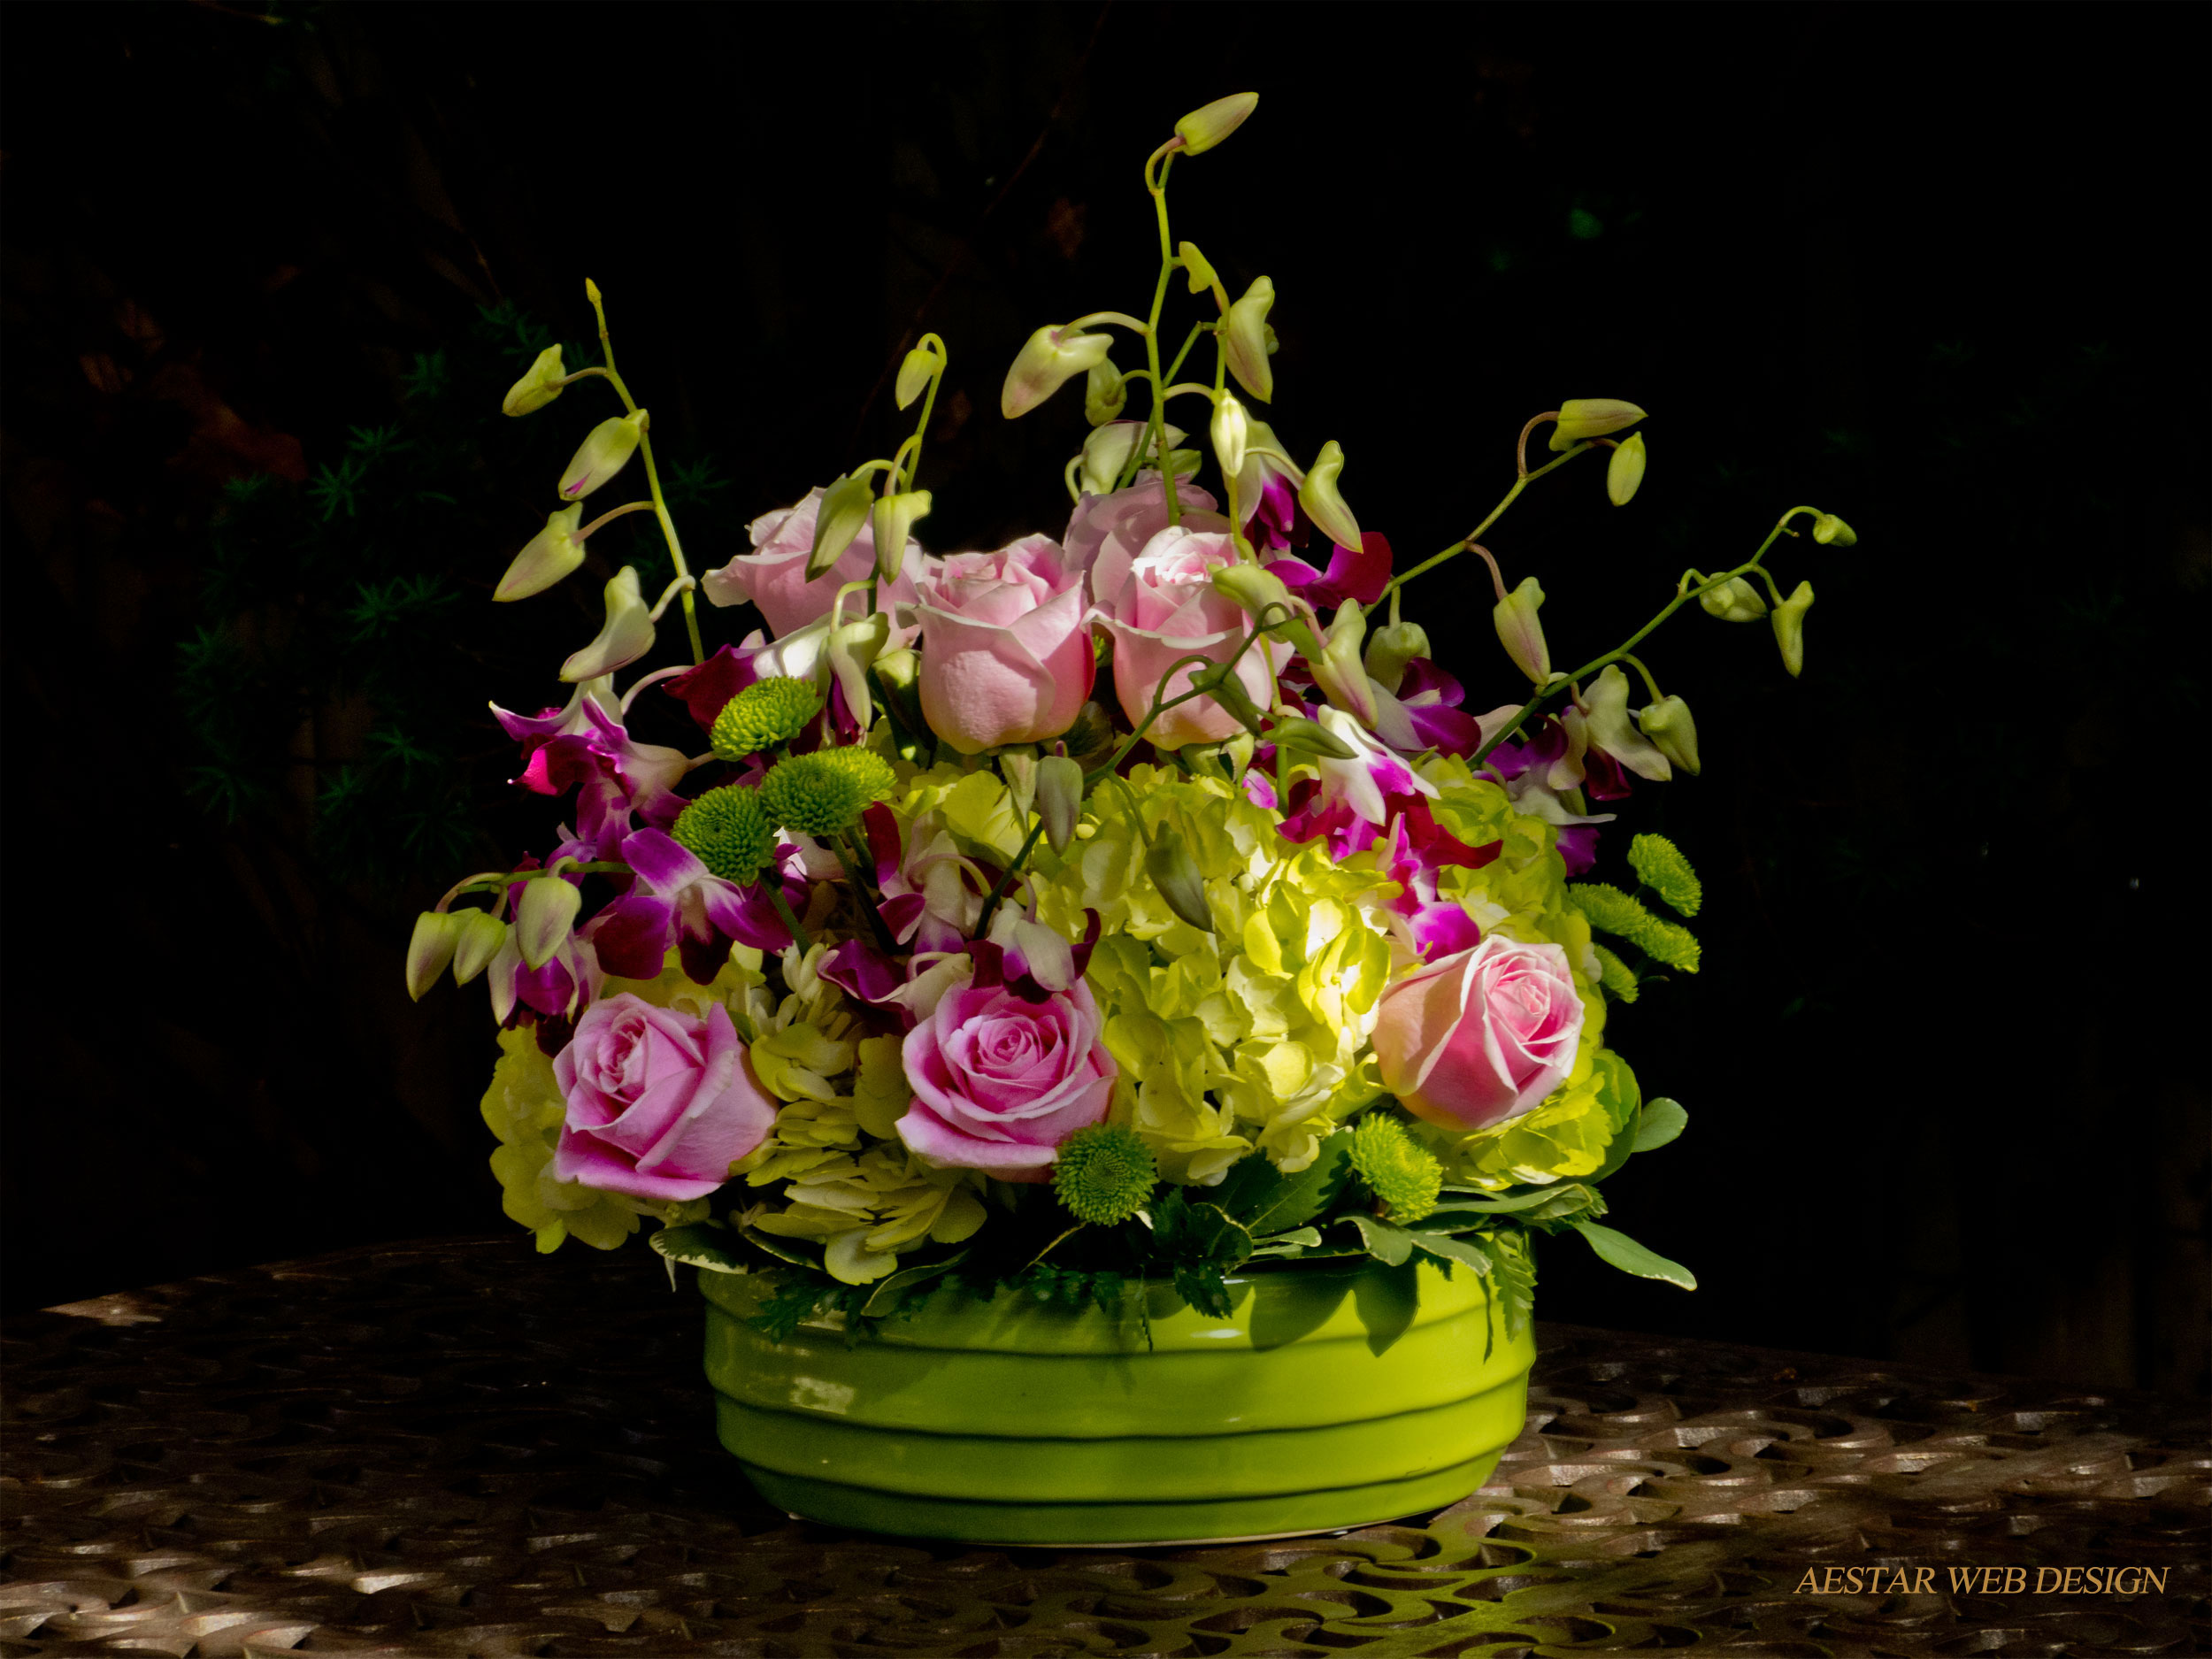 Web Product Photography, Flowers Basket, New York City